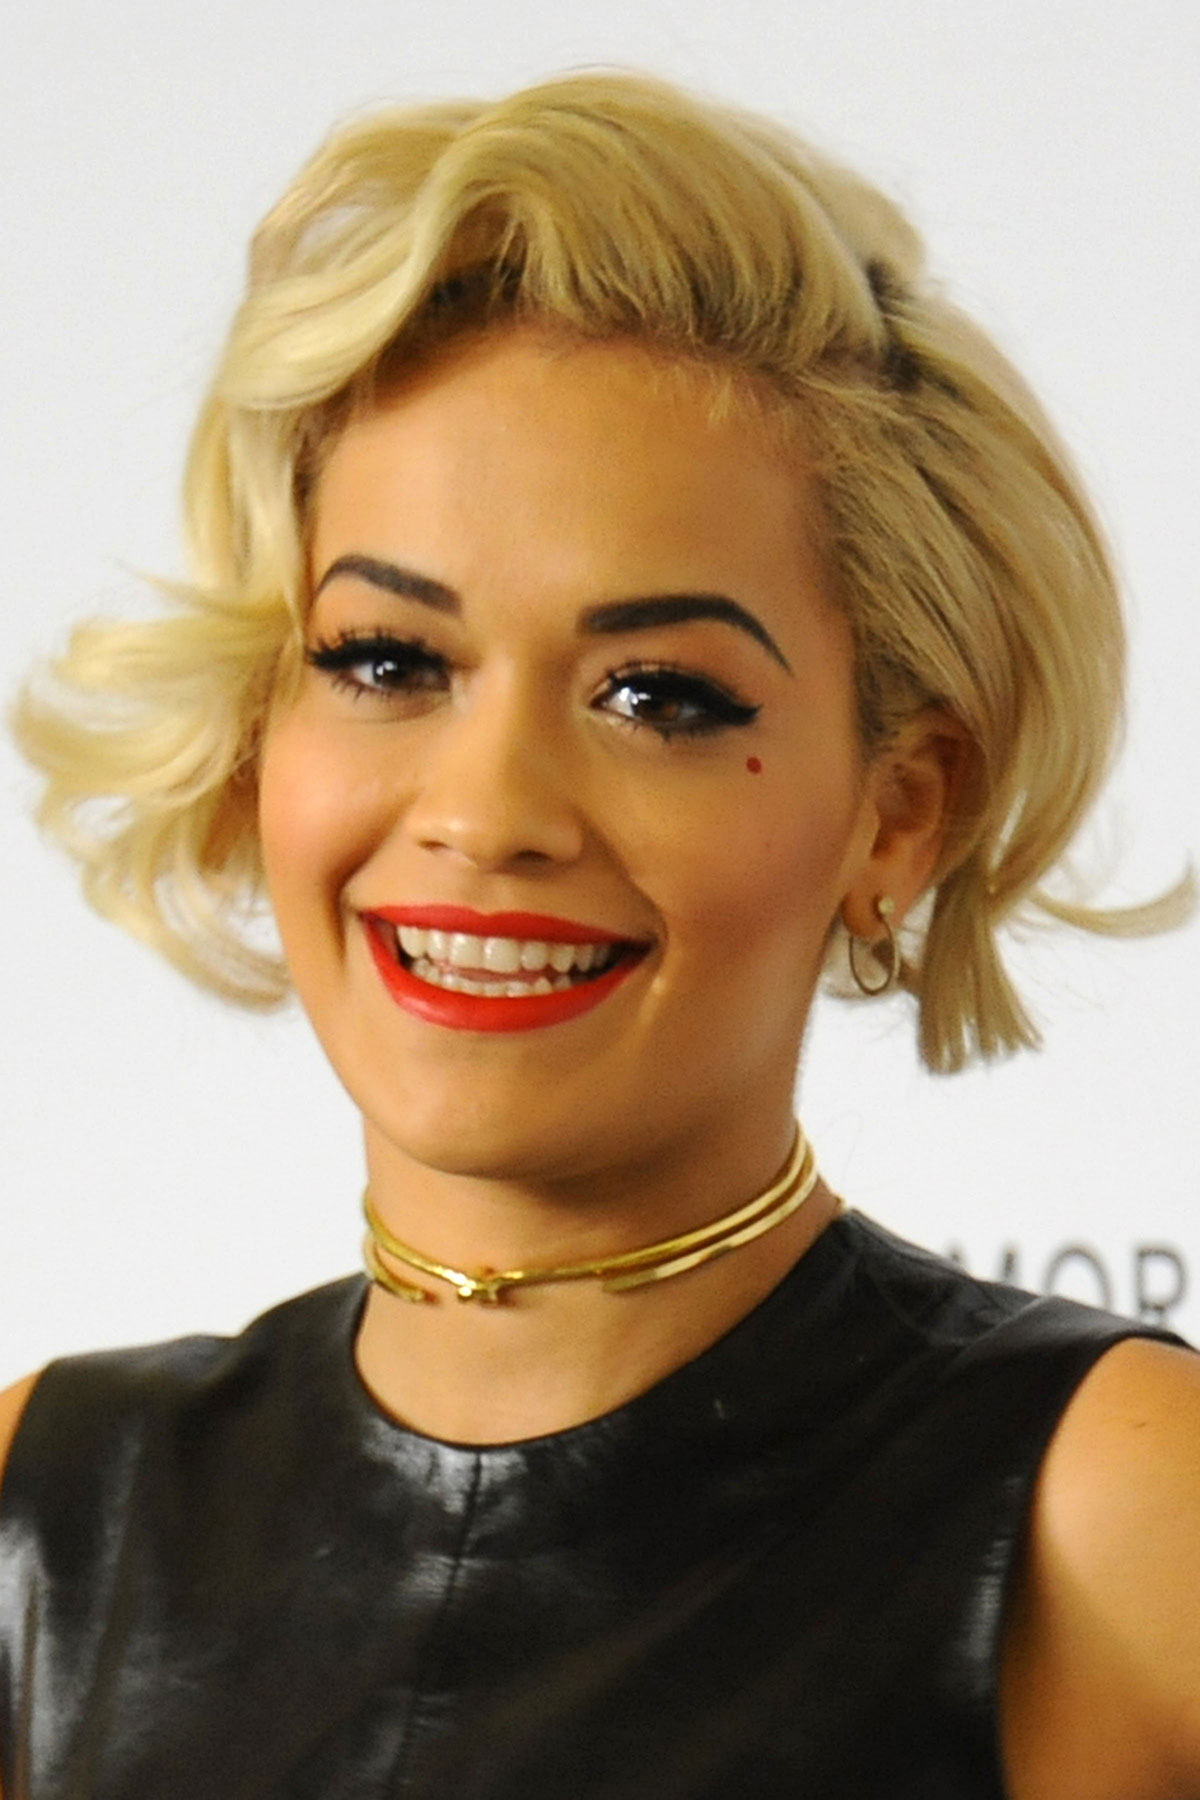 Rita Ora attends REVEAL Calvin Klein Fragrance Launch